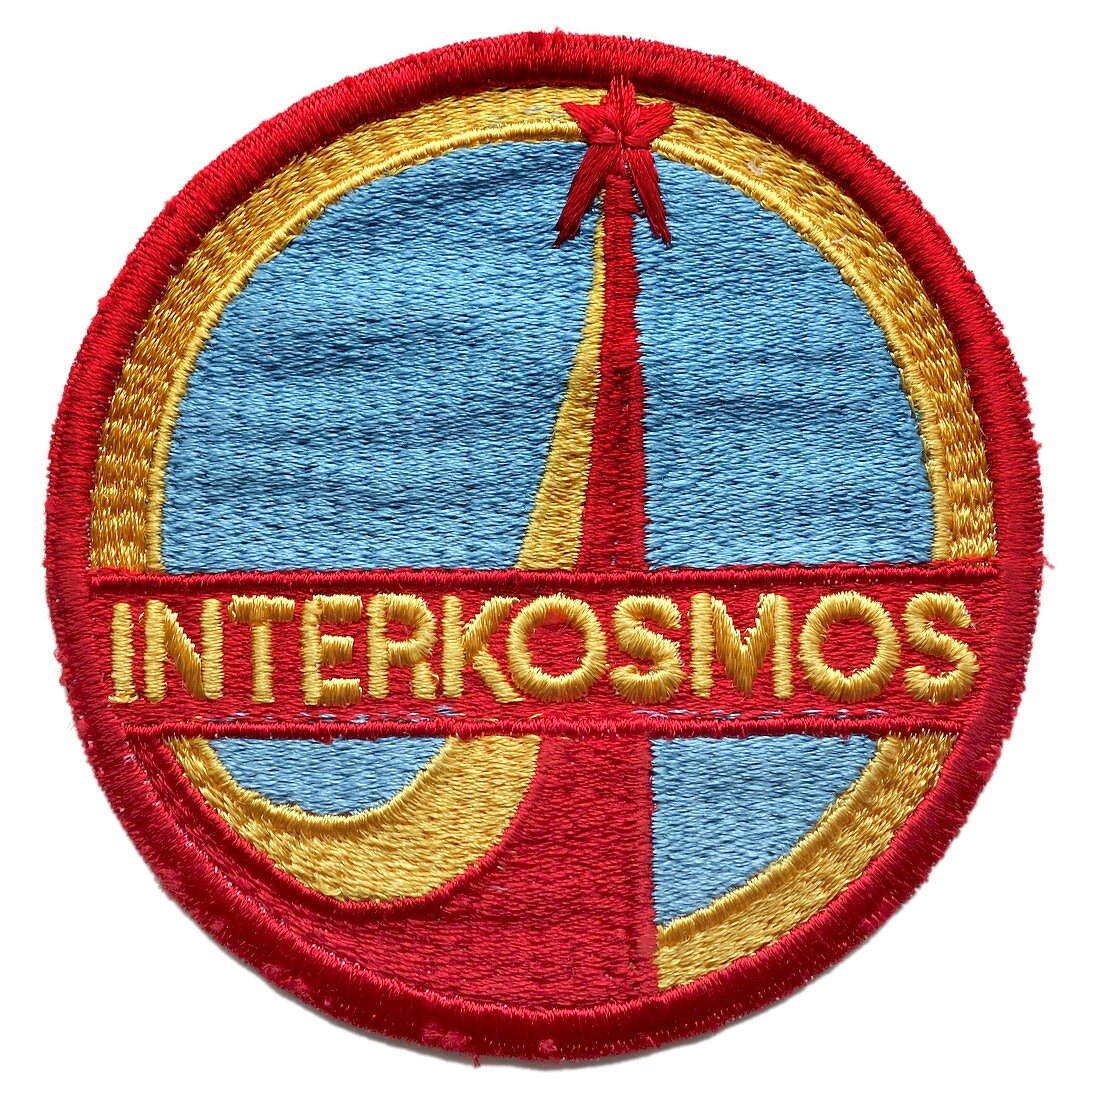 Interkosmos emblem badge